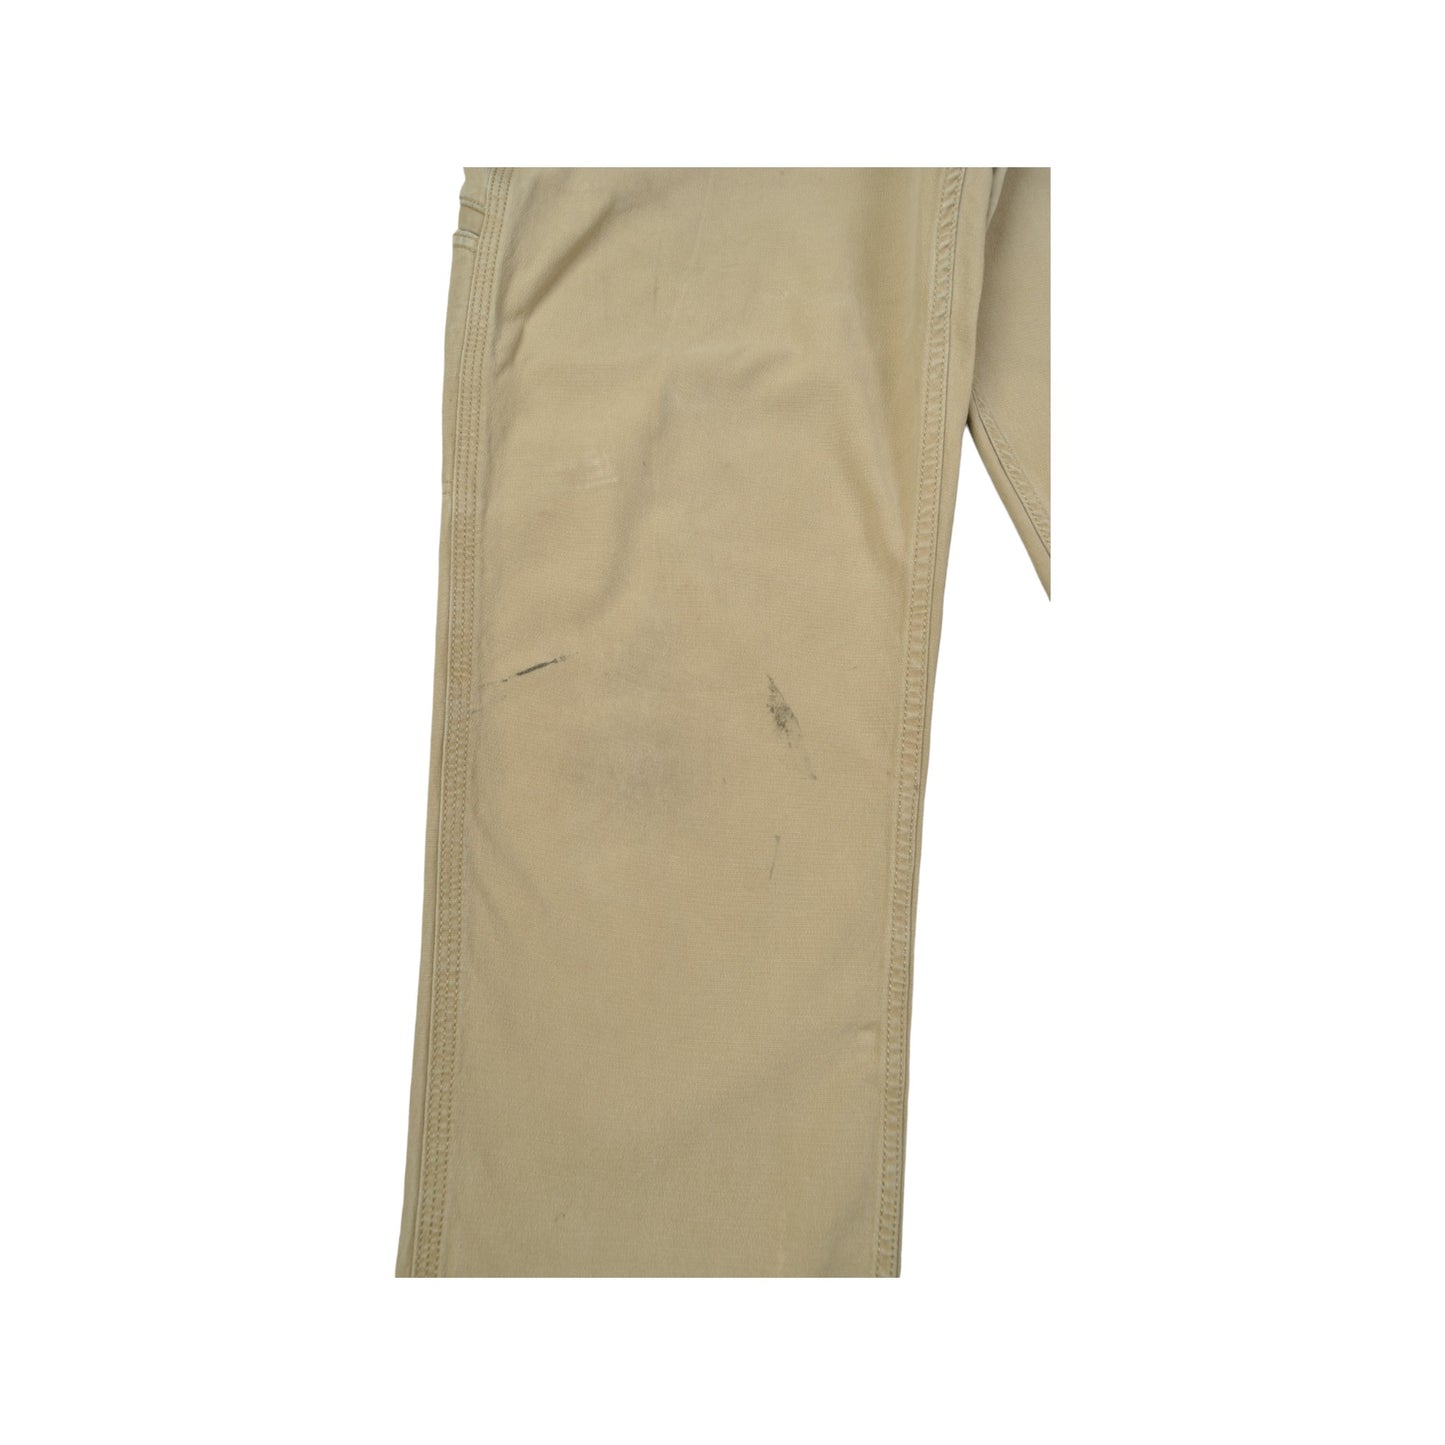 Vintage Carhartt Carpenter Pants Tan W33 L30